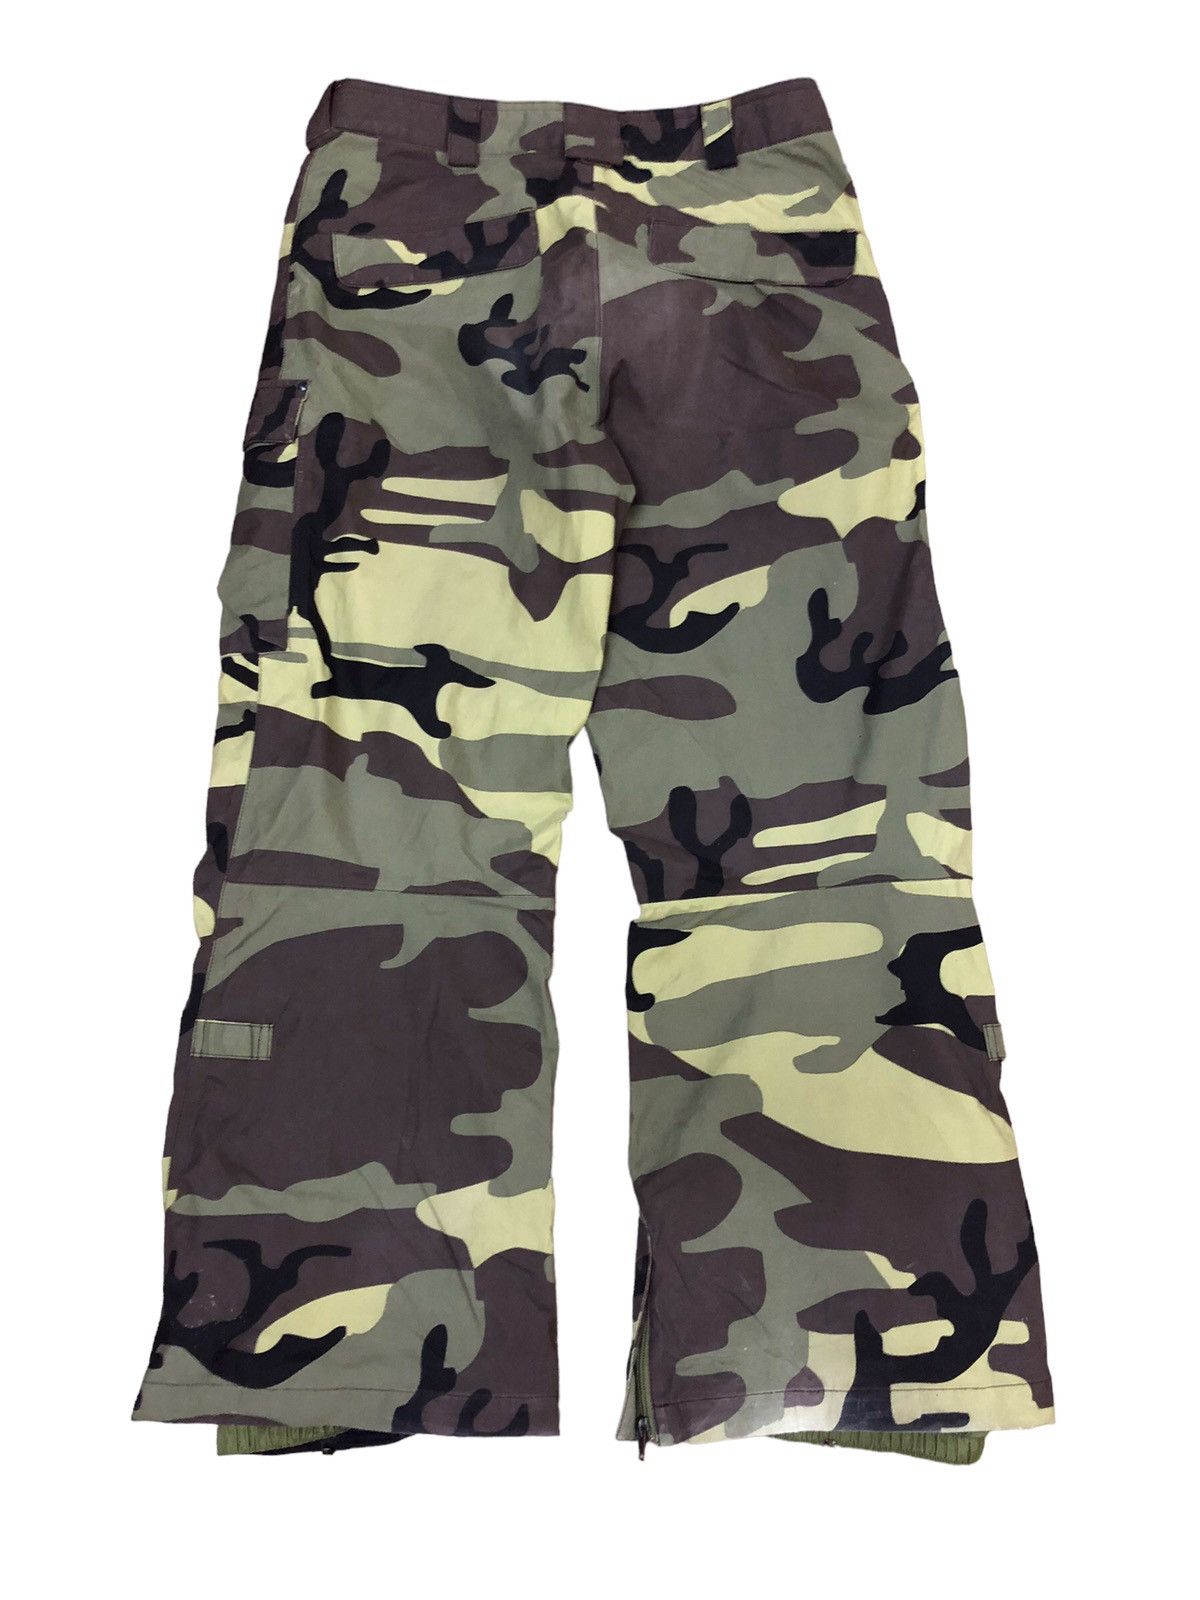 Ronin burton dryride outerwear camouflage snowboard pants - 2